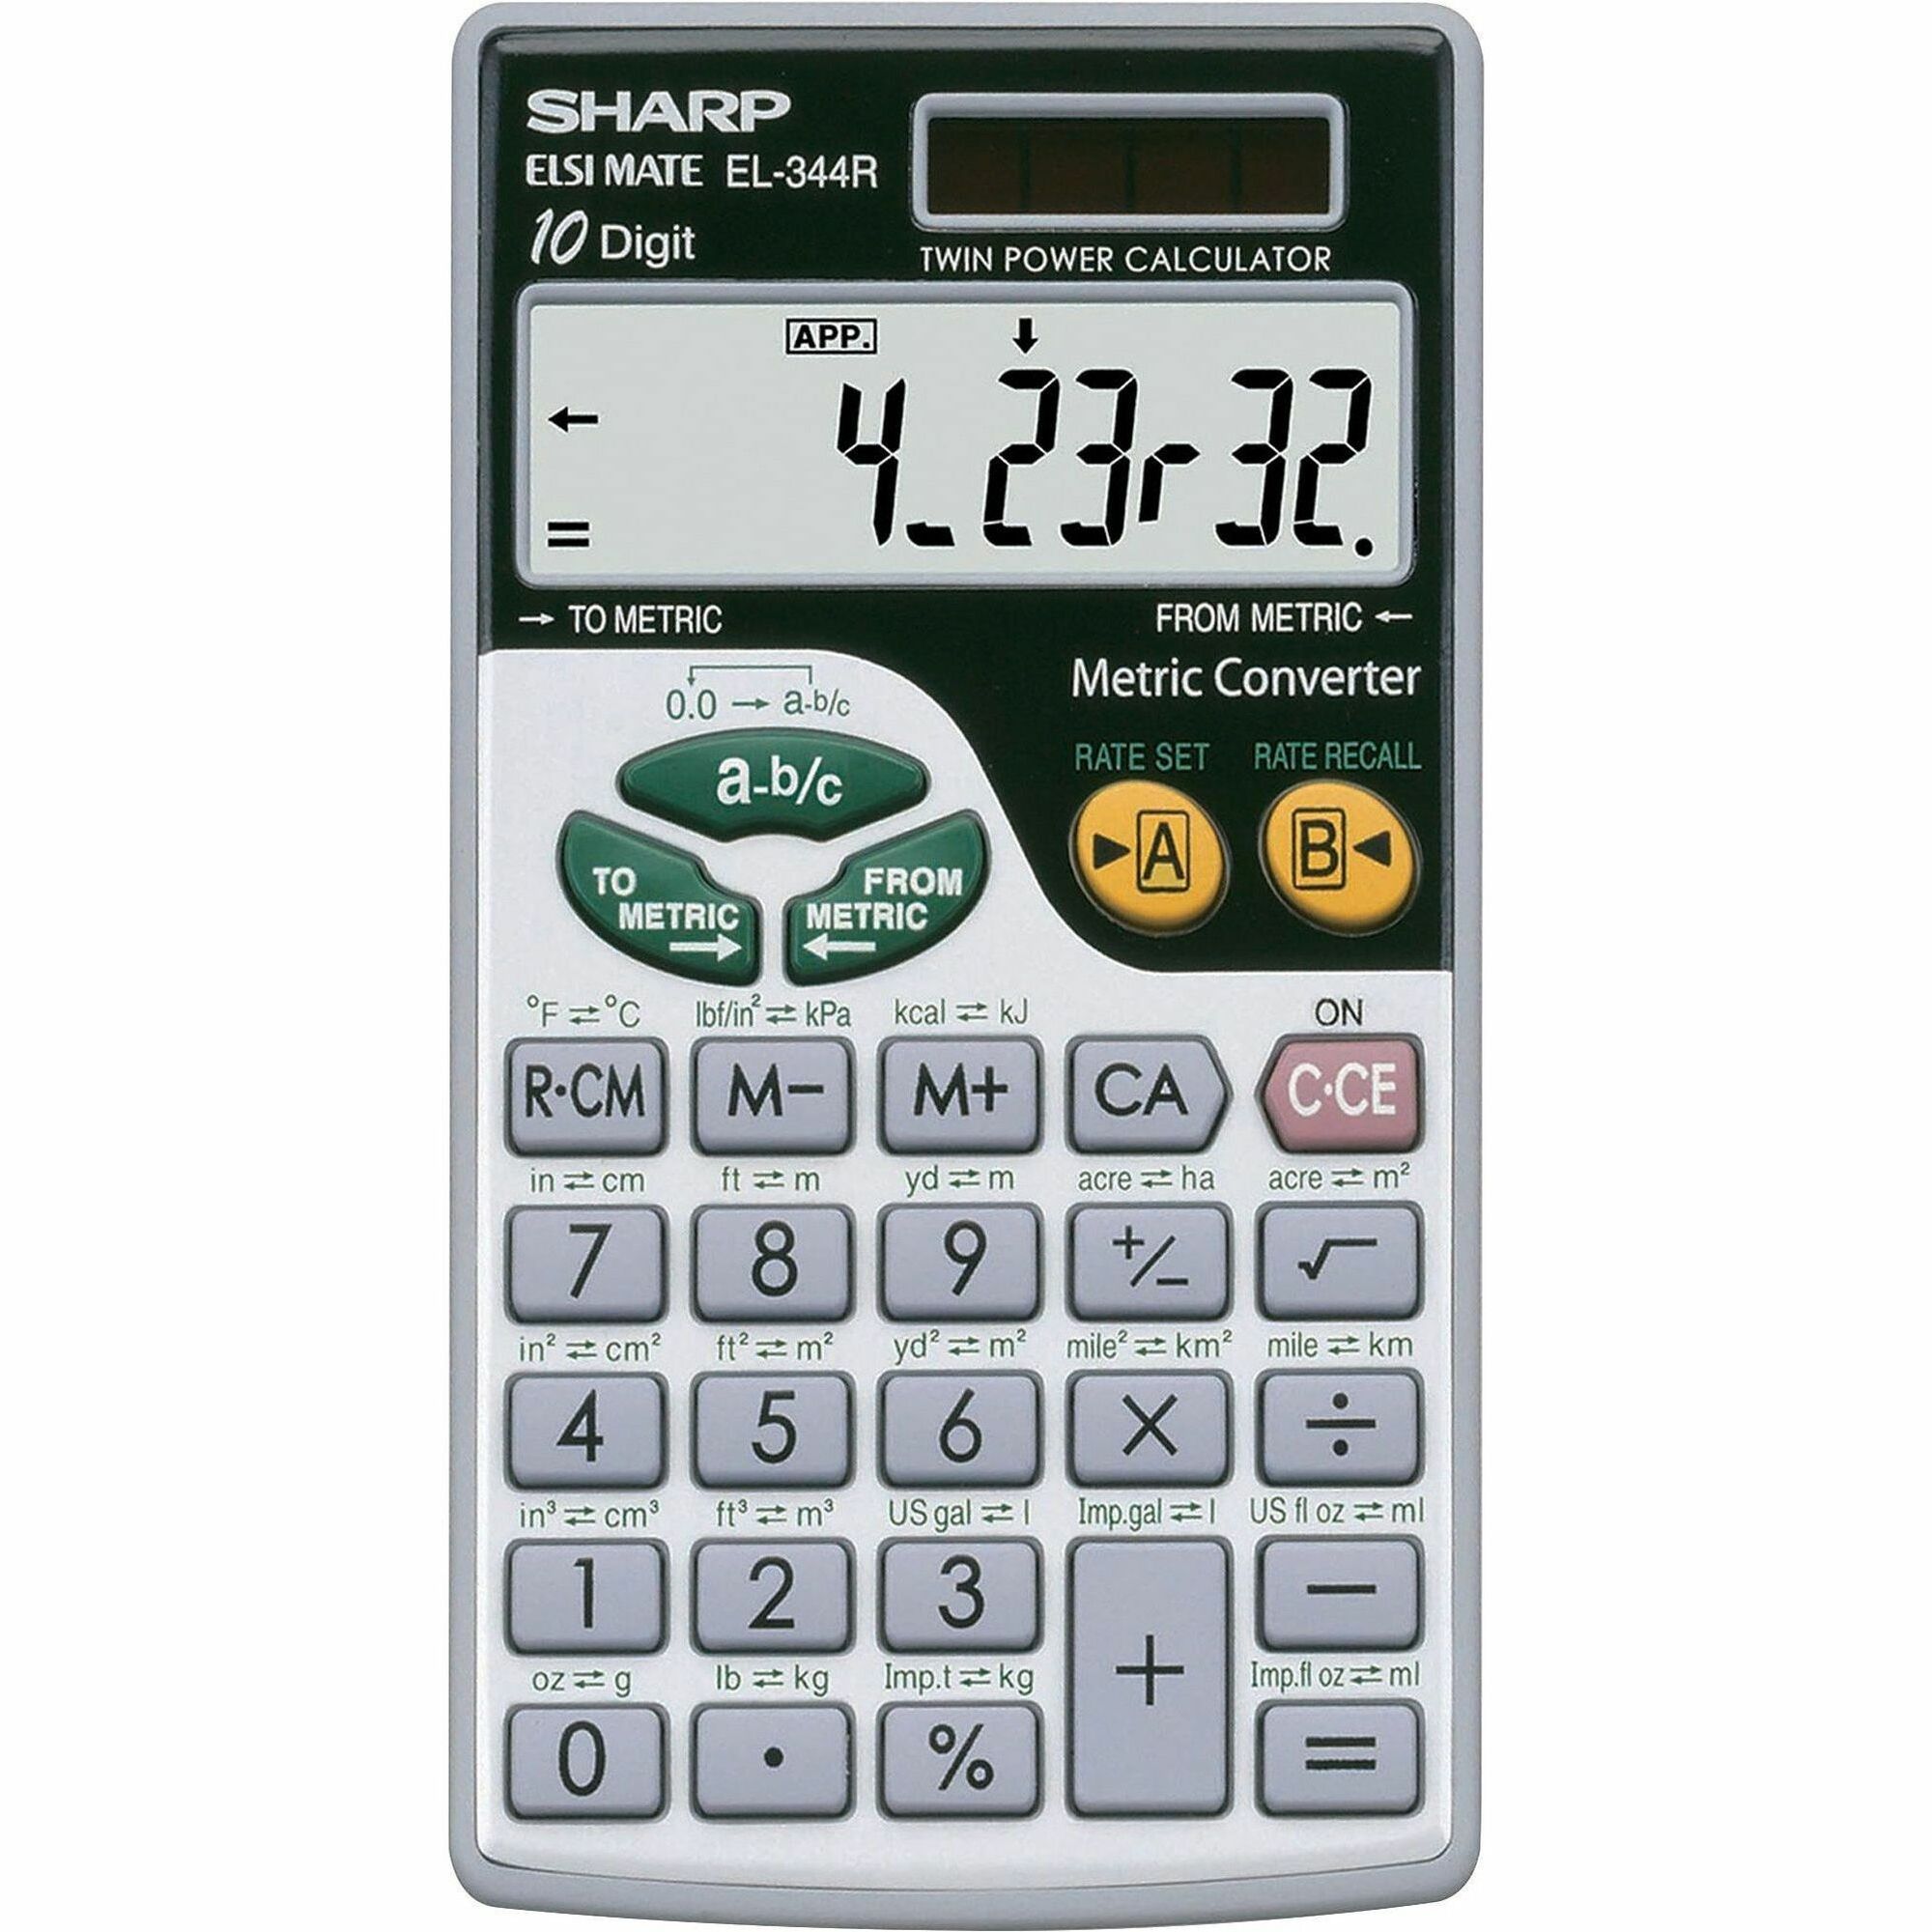 t test power calculator